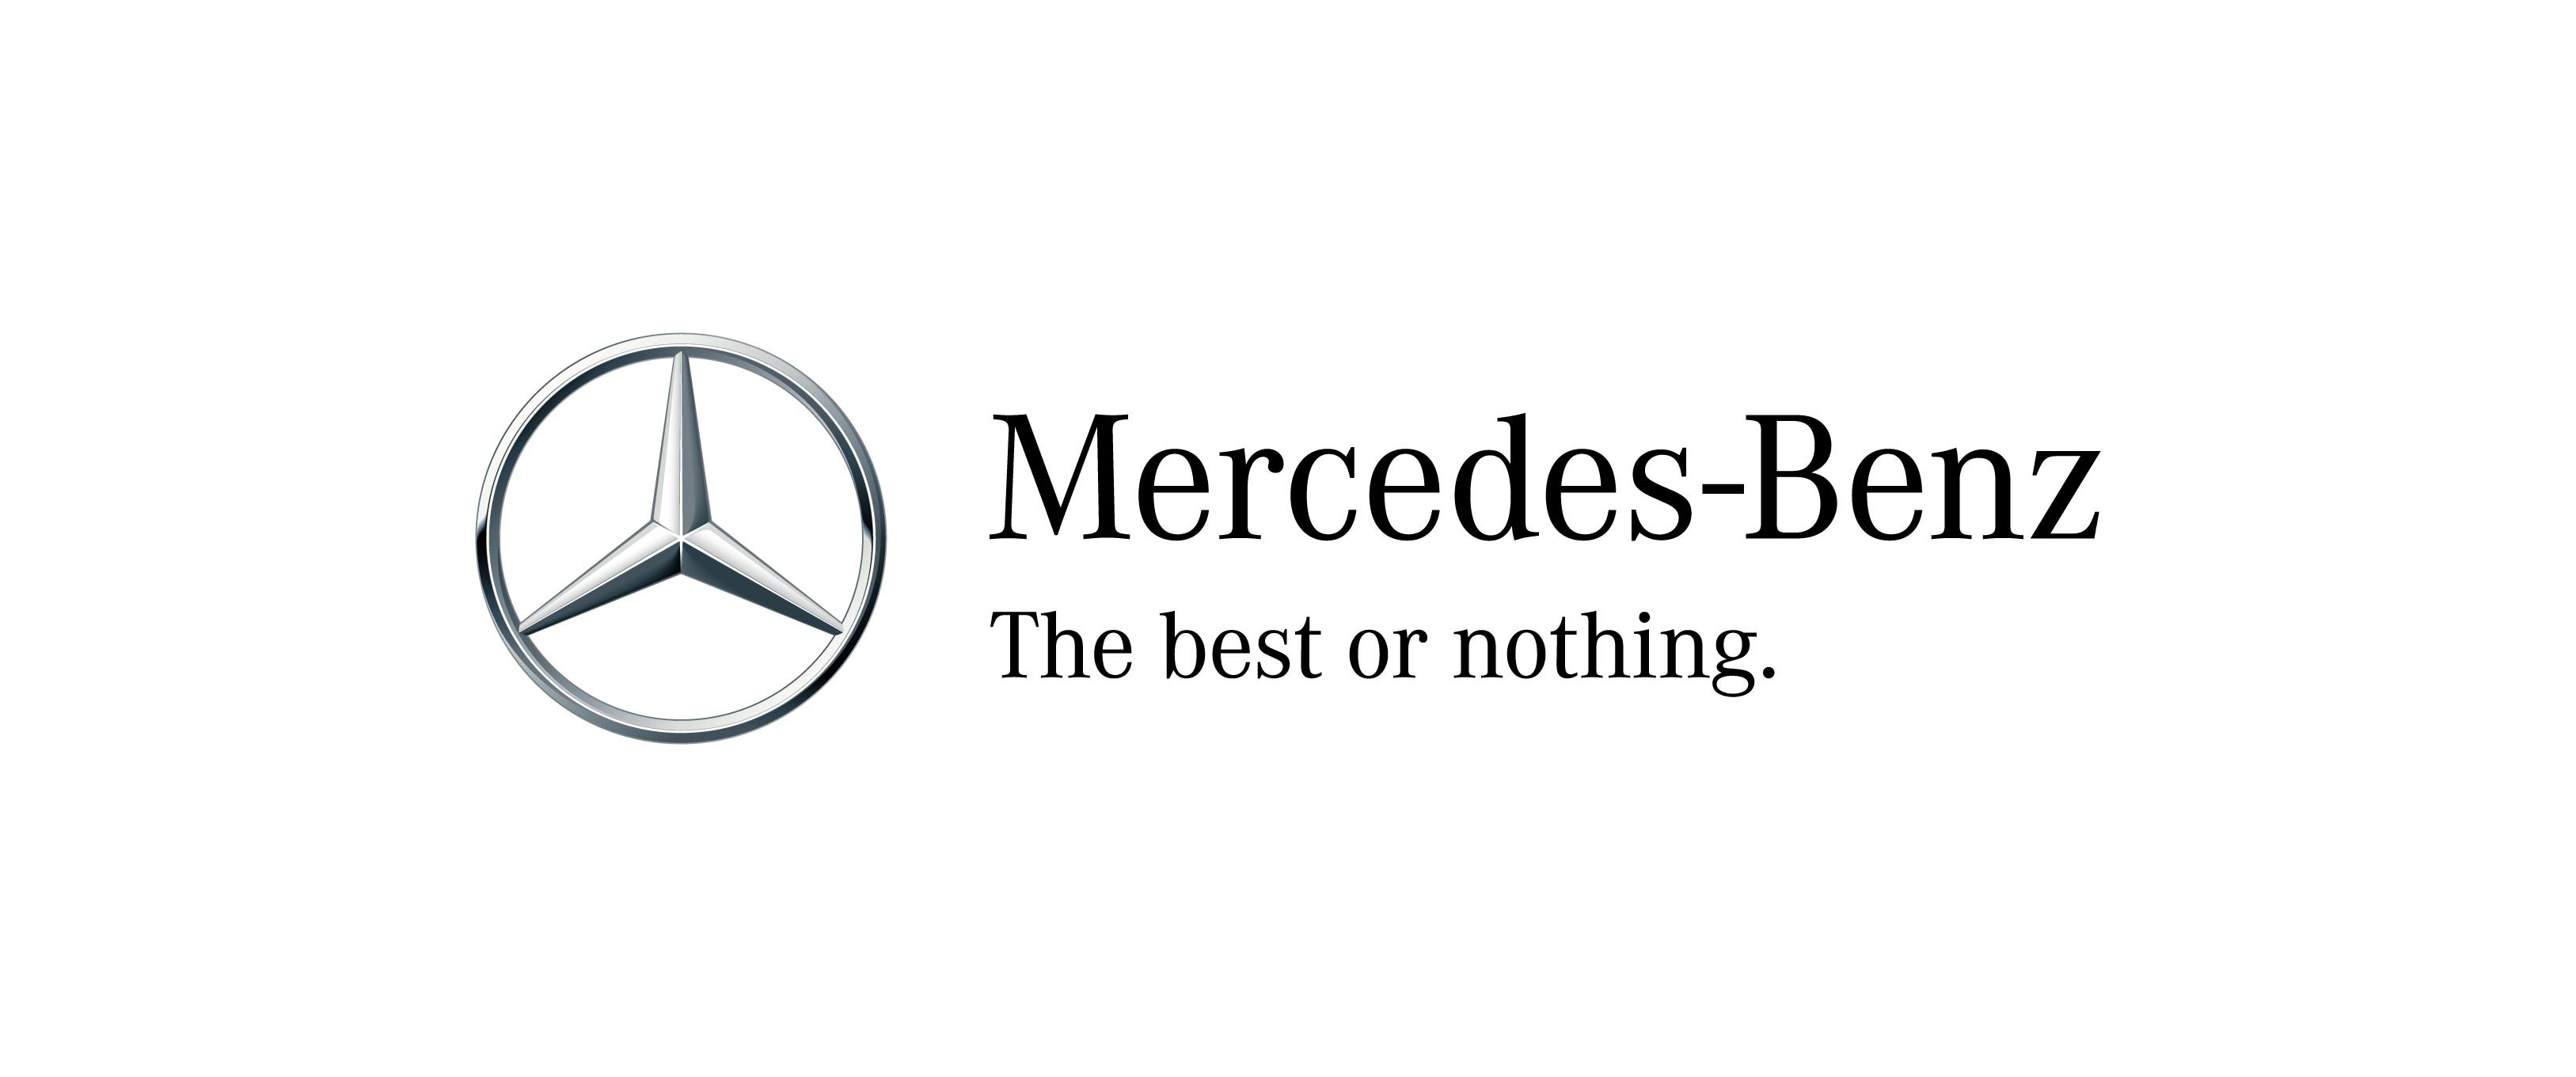 3254x1361 File:Mercedes-Benz India Logo.jpg